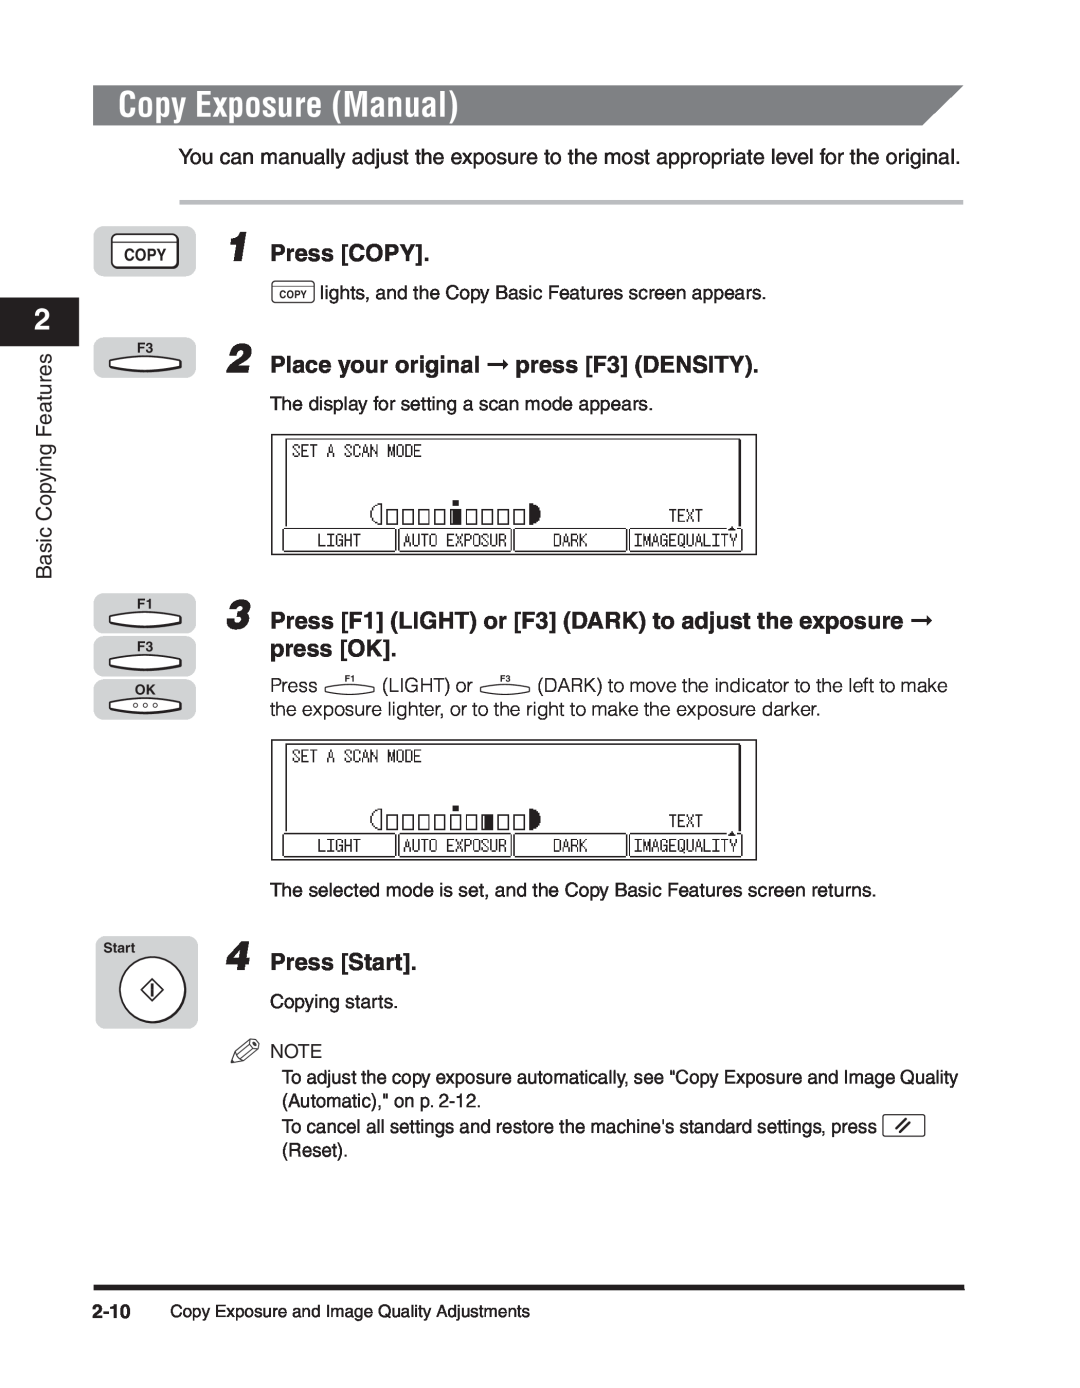 Canon 2300 Copy Exposure Manual, Place your original press F3 DENSITY, Press COPY, Press Start, Basic Copying Features 